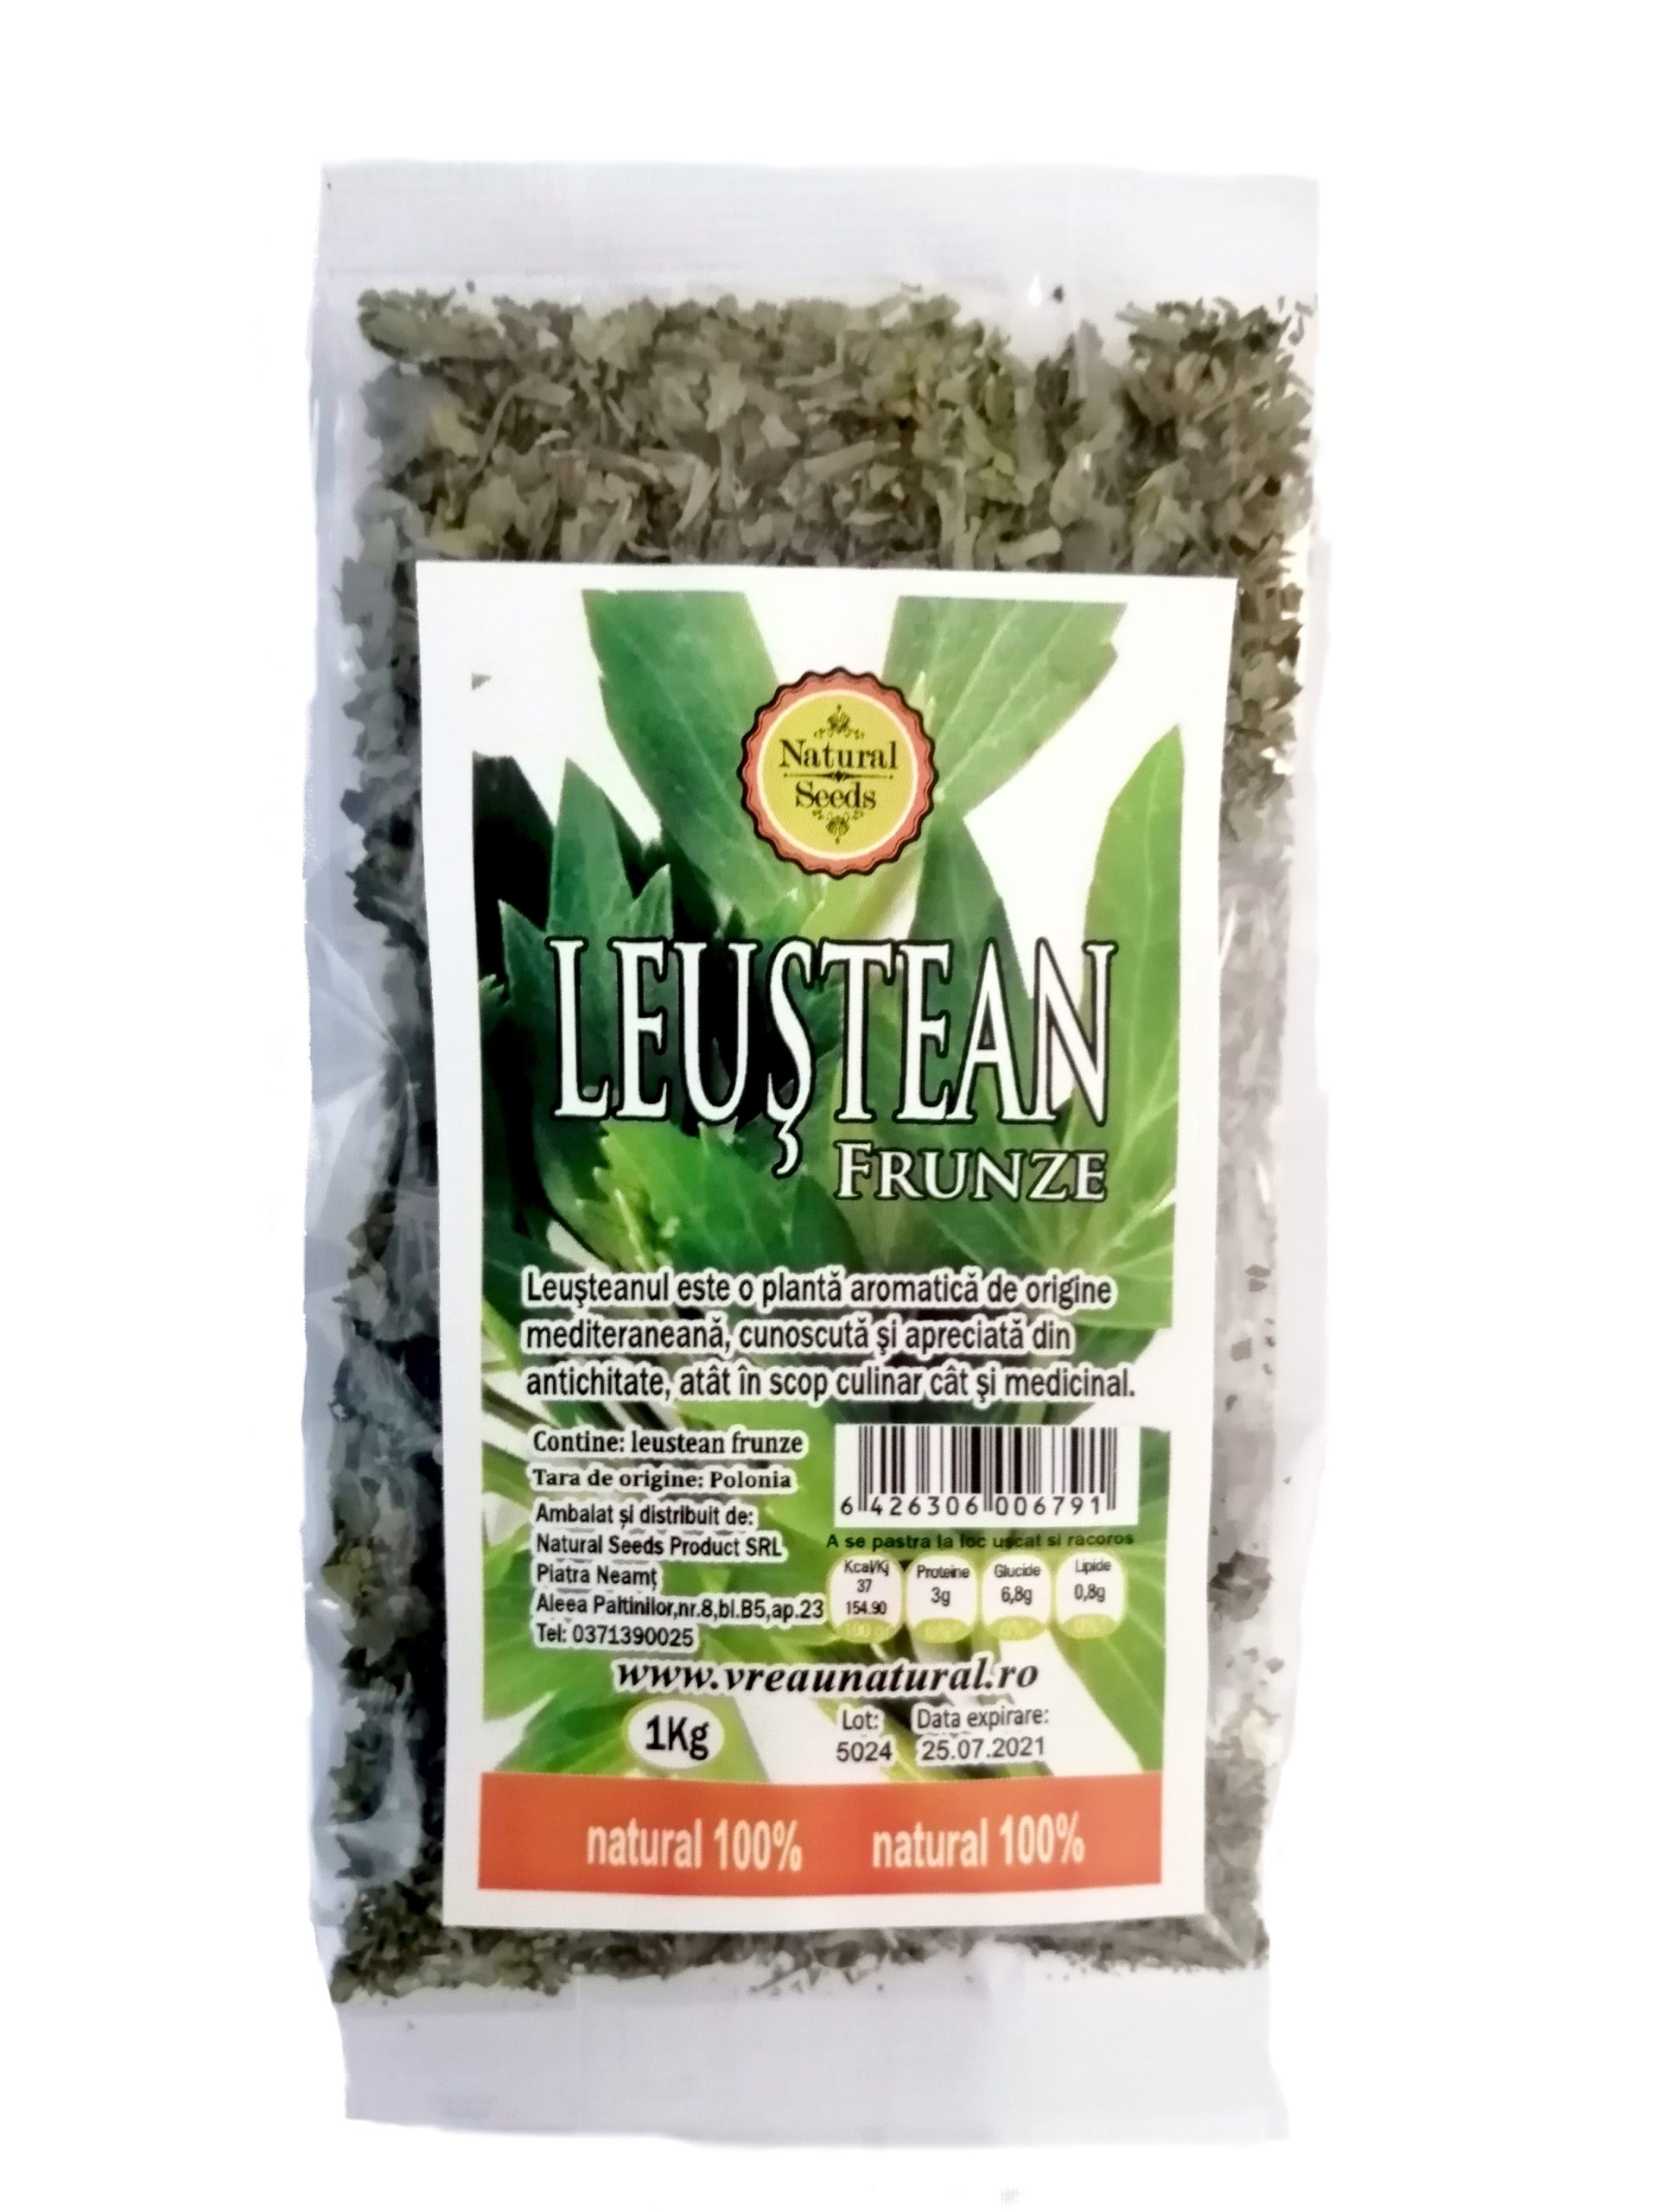 Leustean frunze, Natural Seeds Product